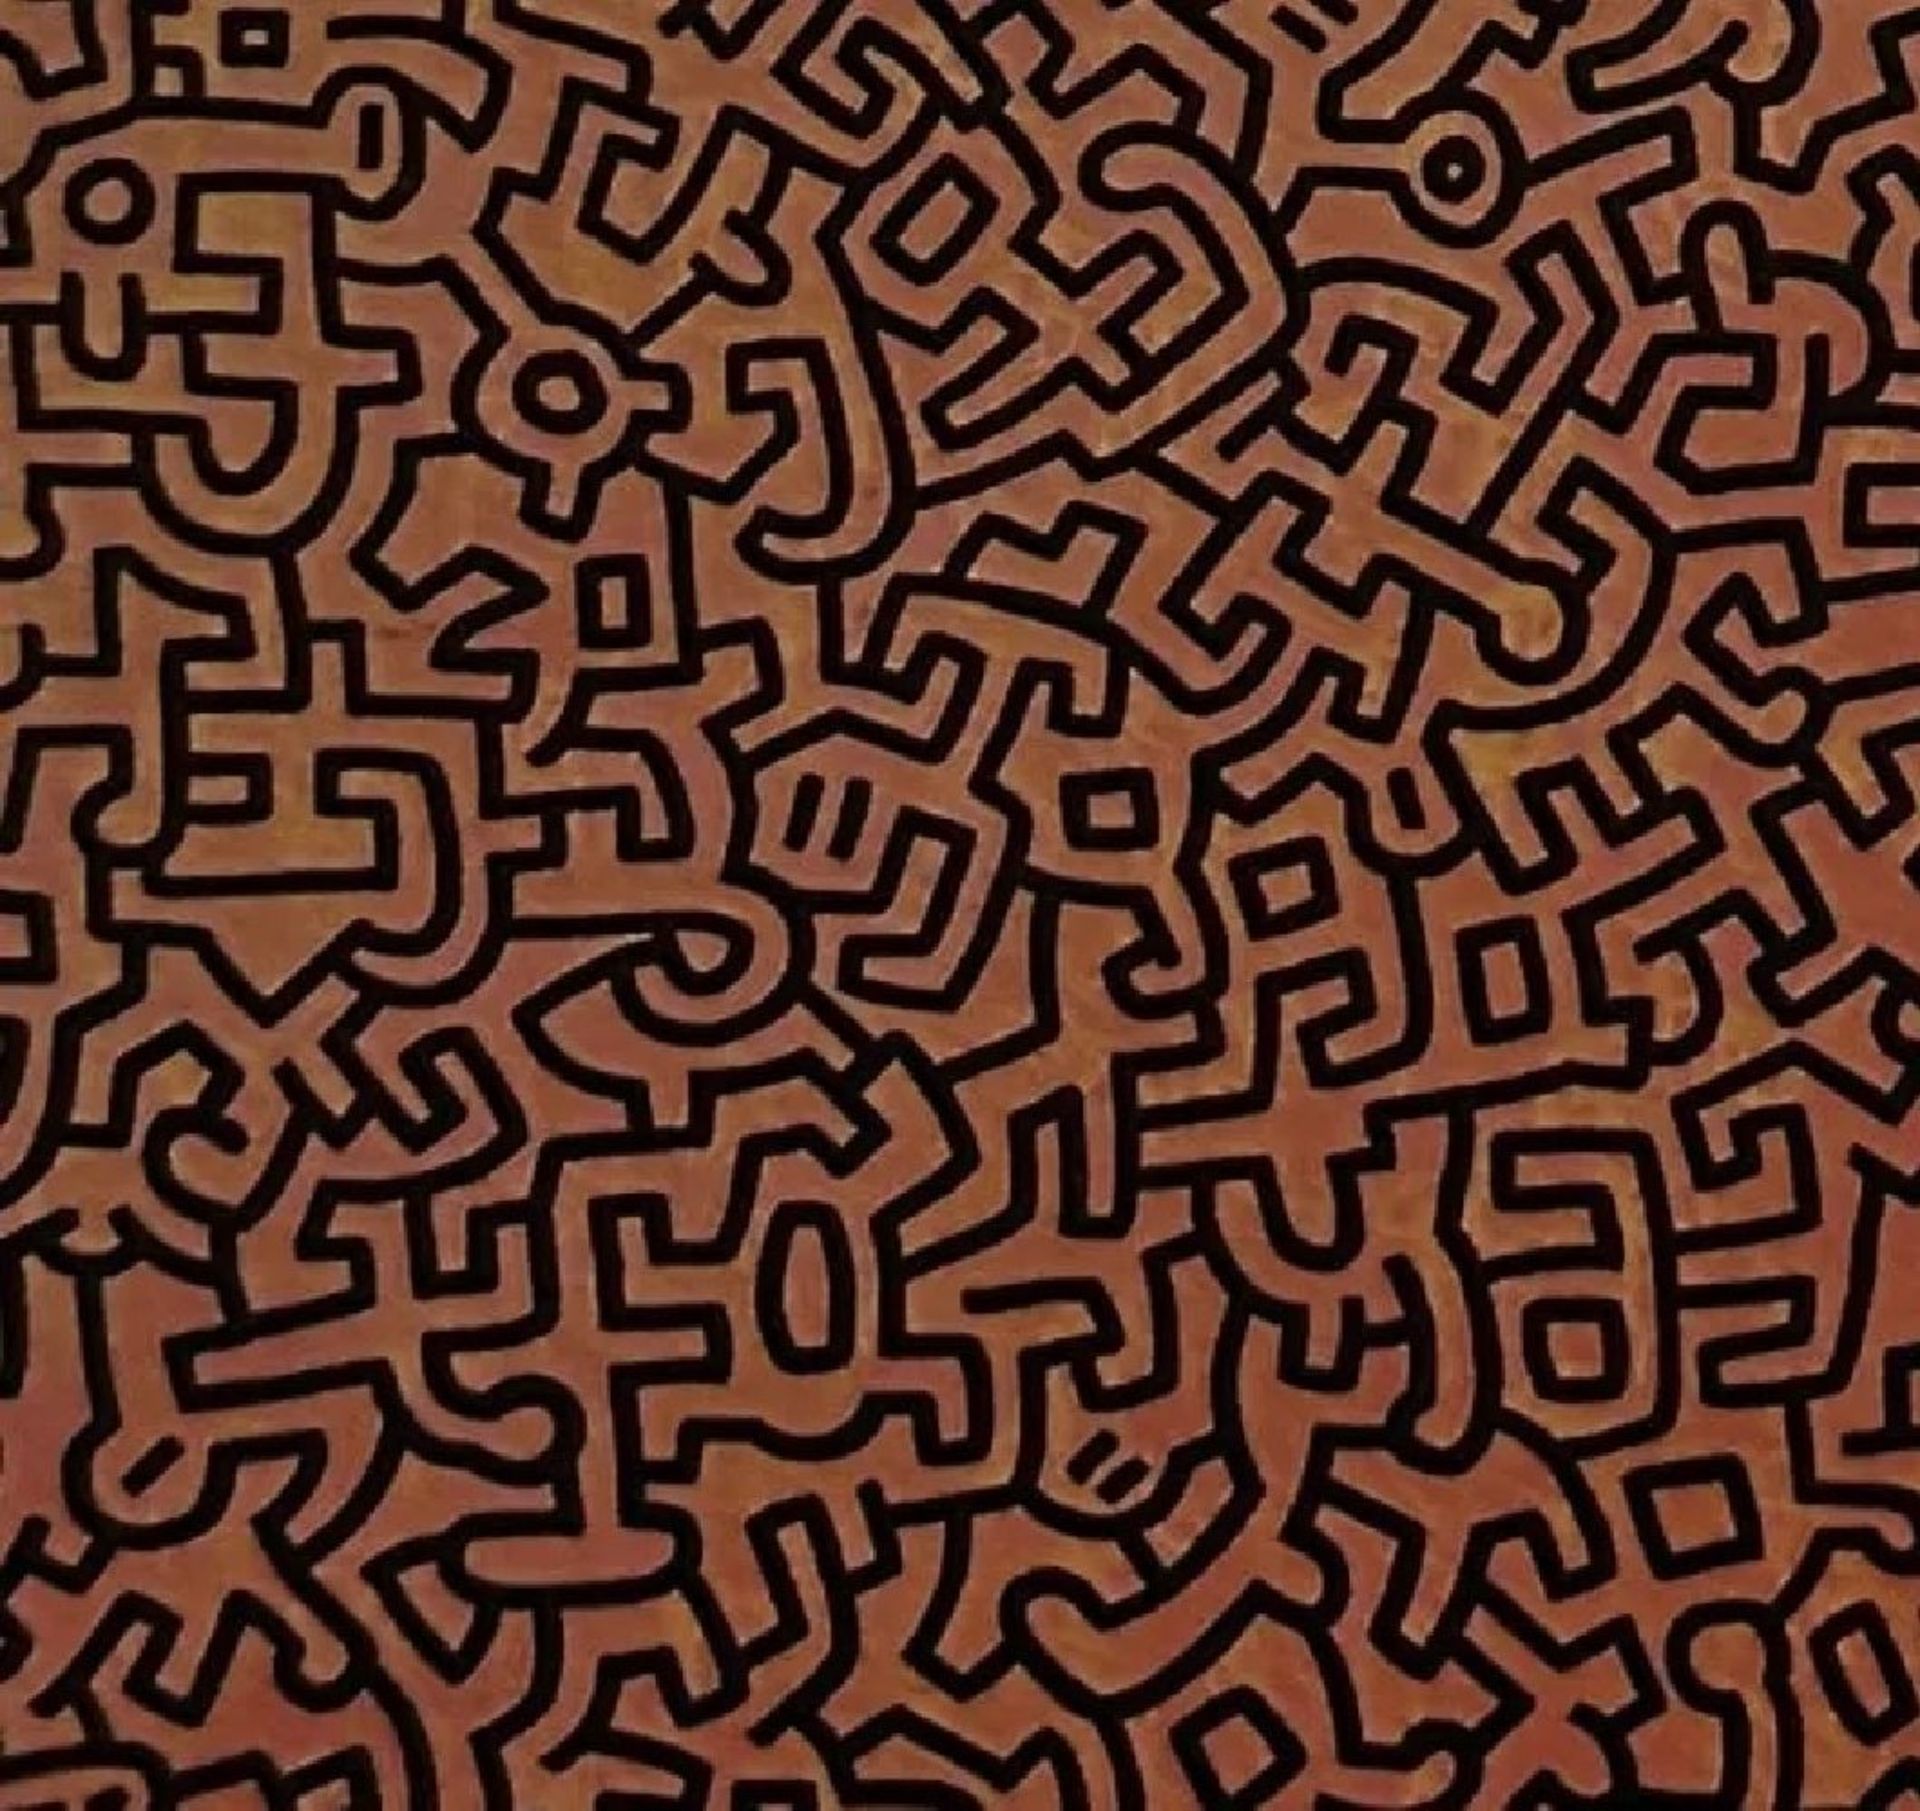 Keith Haring "Untitled" Print. - Bild 5 aus 6